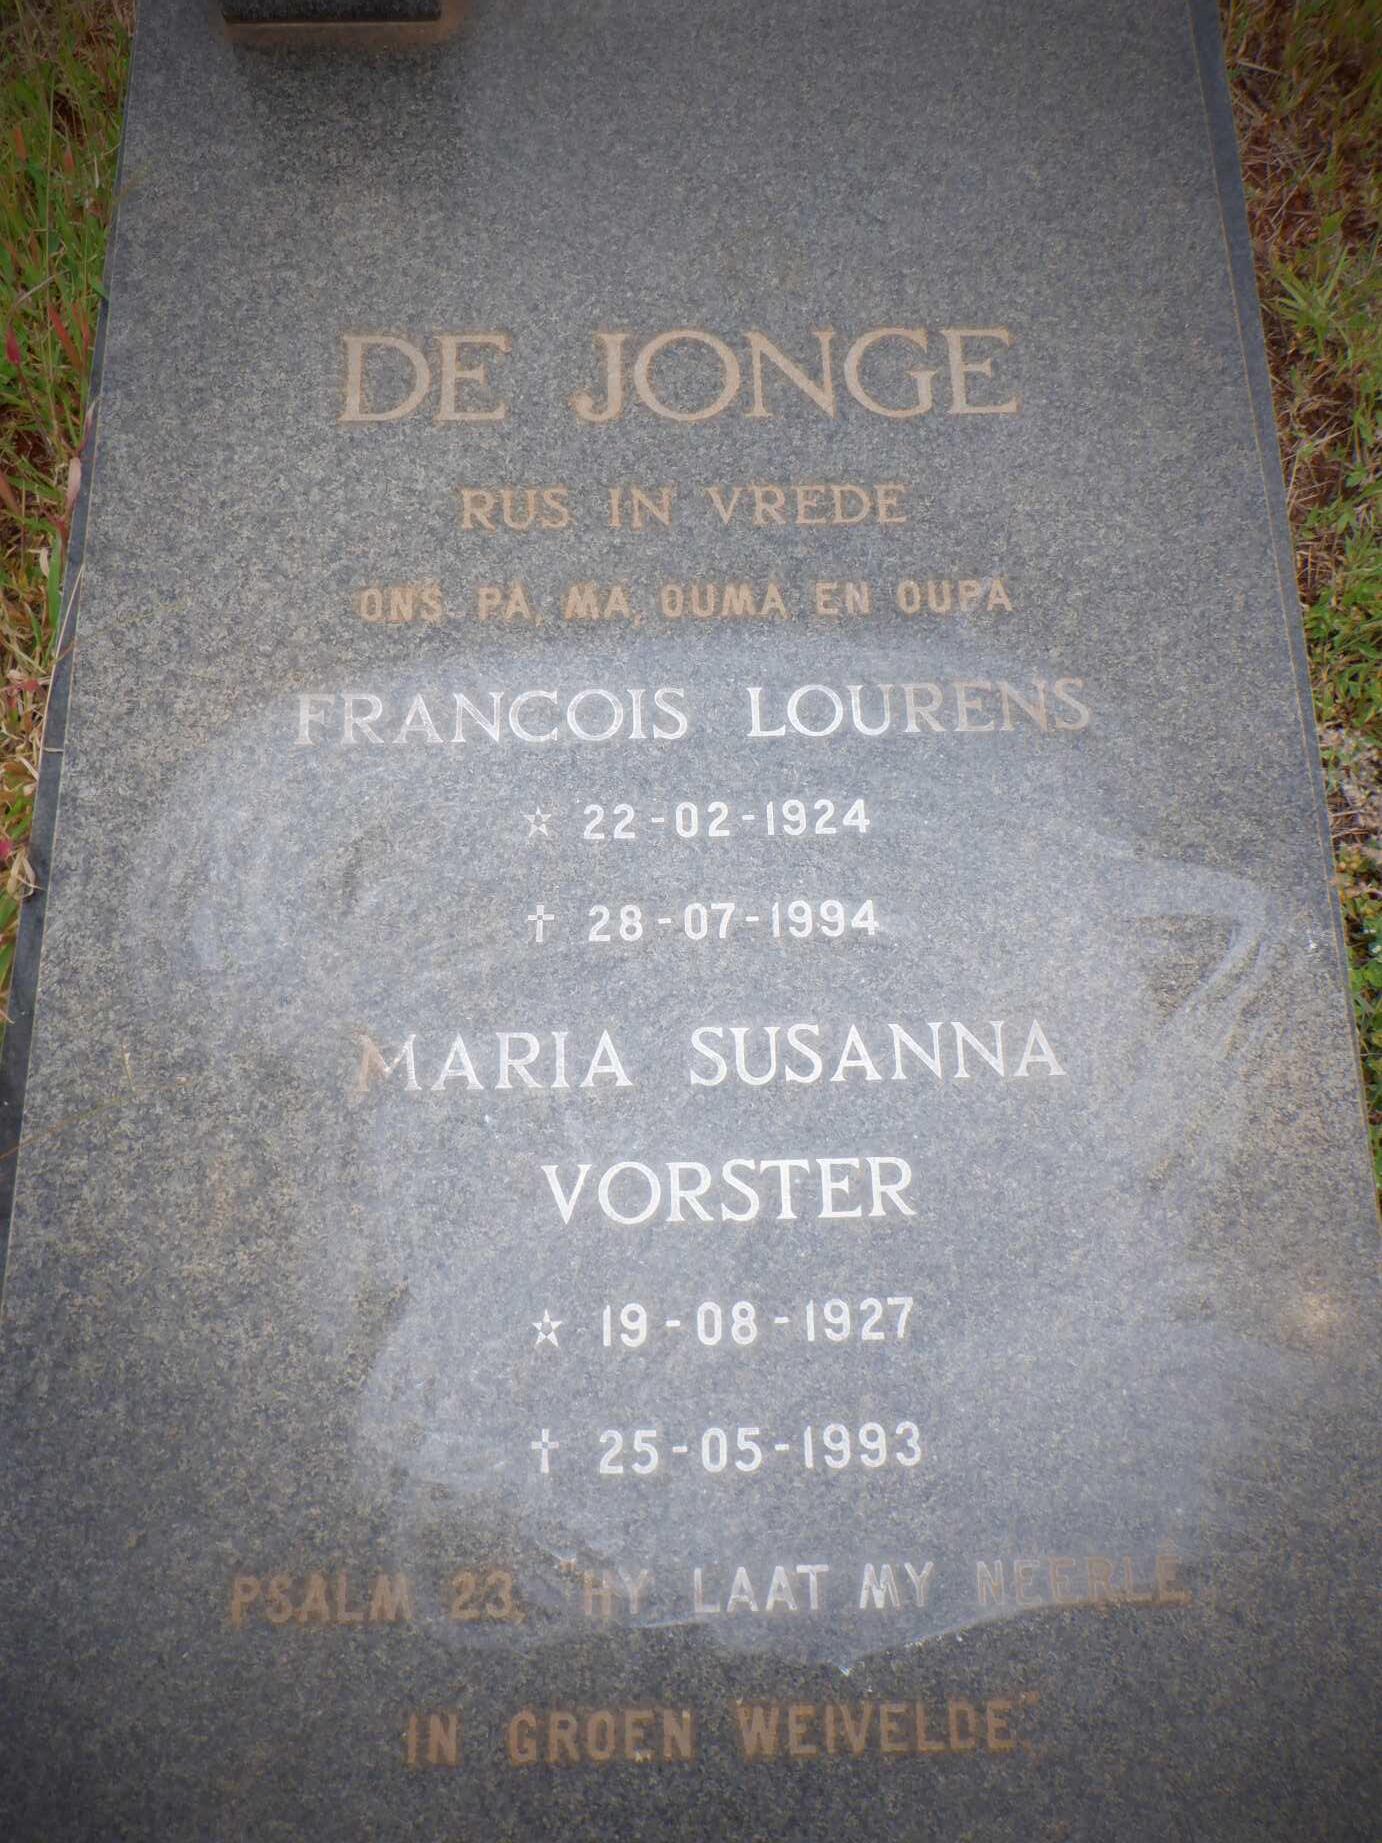 JONGE Francois Lourens, de 1924-1994 & Maria Susanna VORSTER 1927-1993